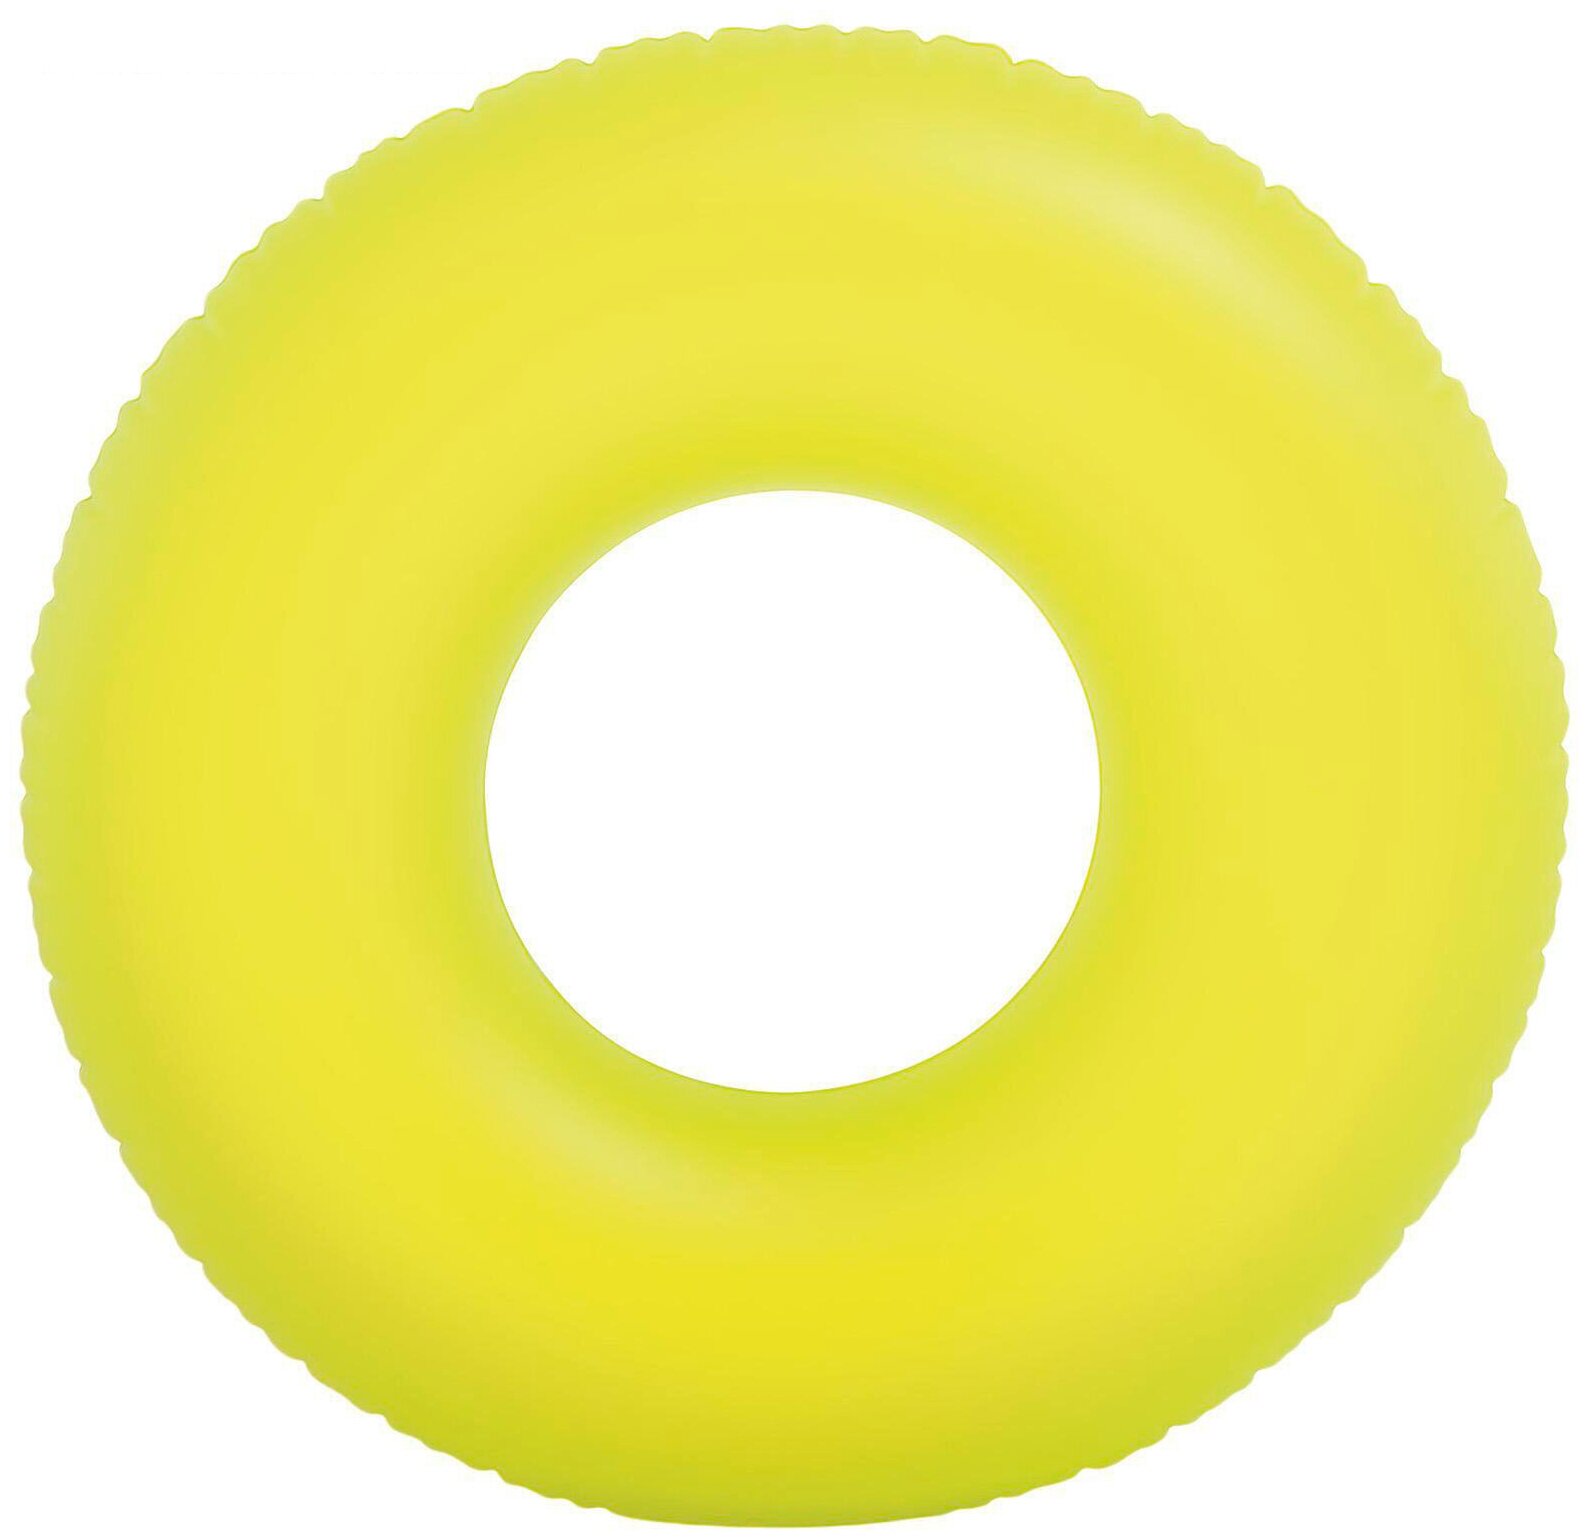 Круг для плавания «Неон» d=91см от 9 лет цвета микс 59262NP INTEX